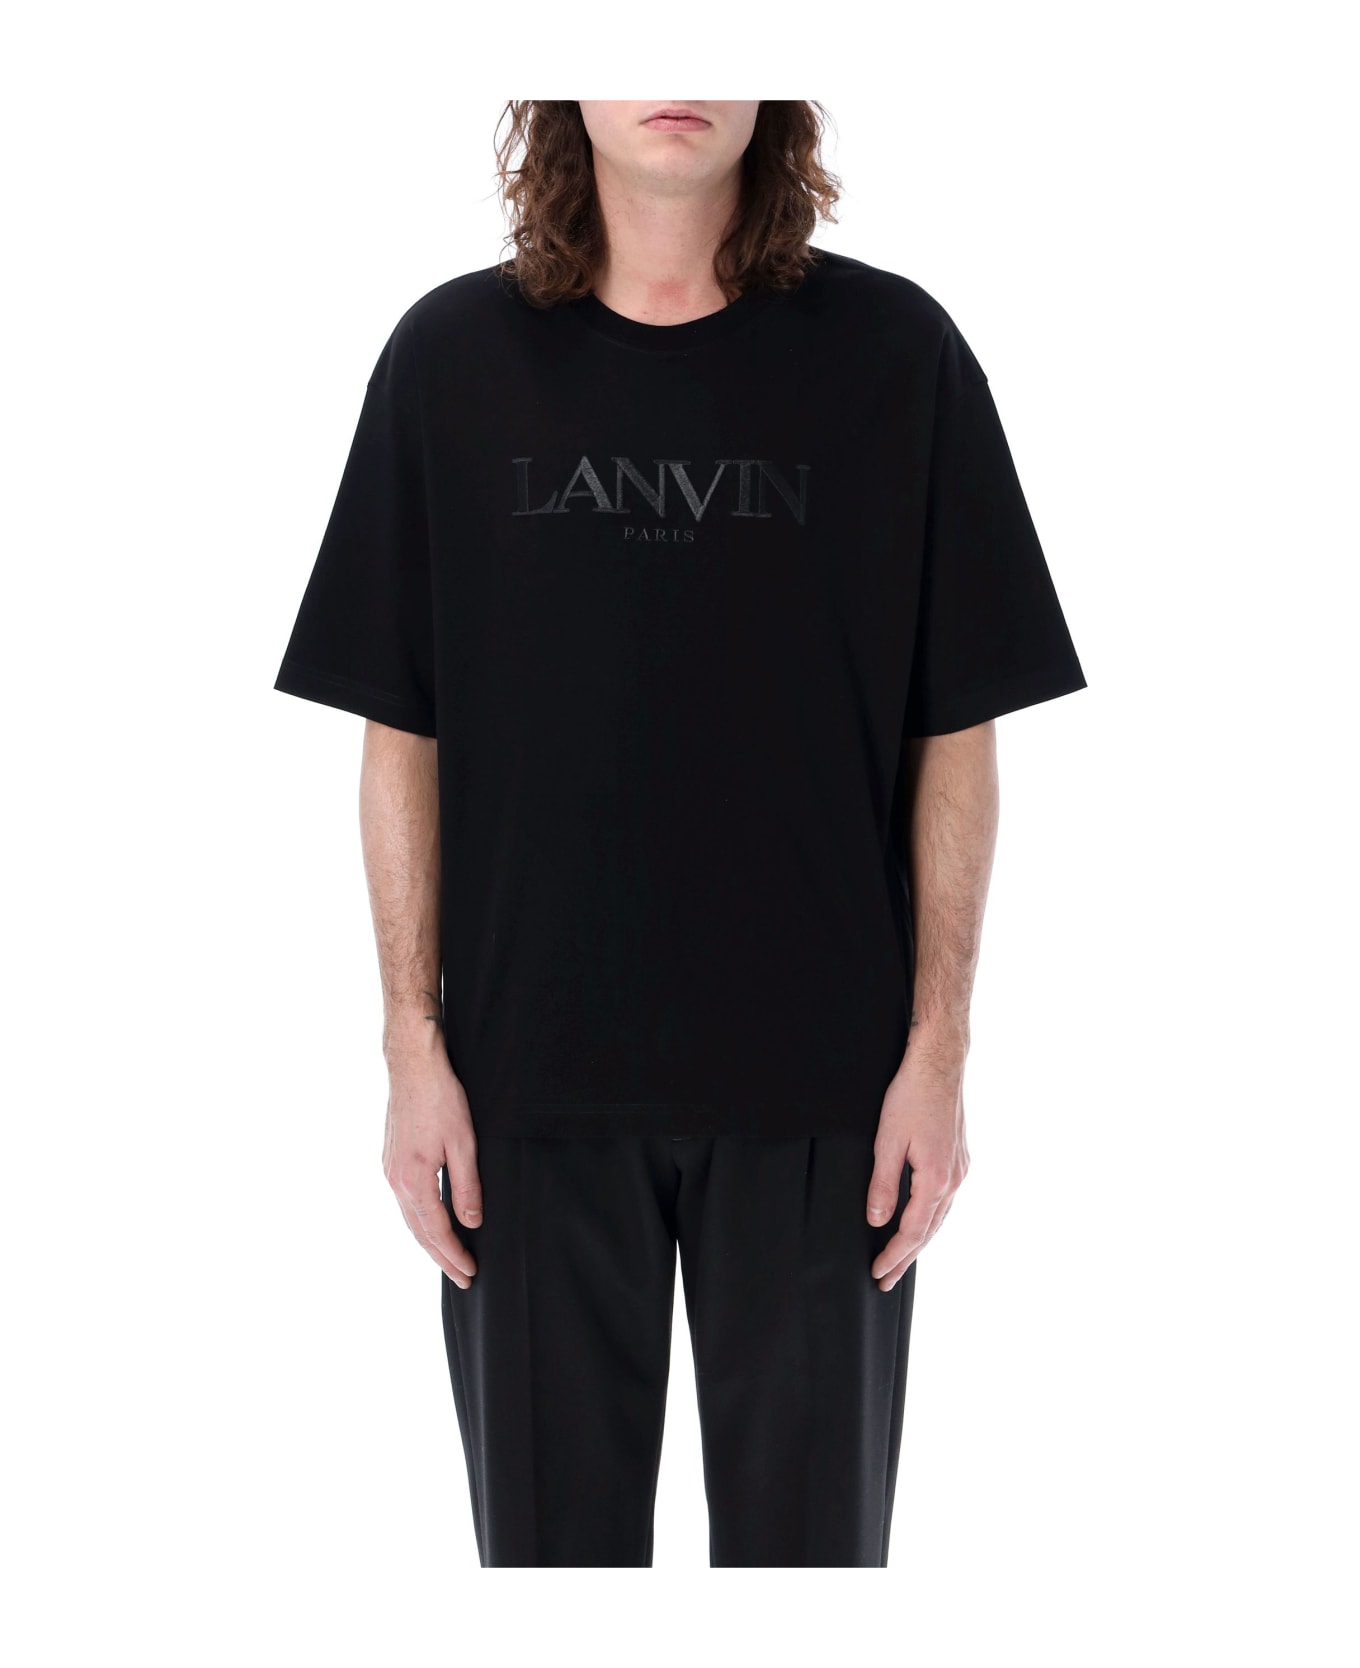 Lanvin Embroidered Logo T-shirt - Black